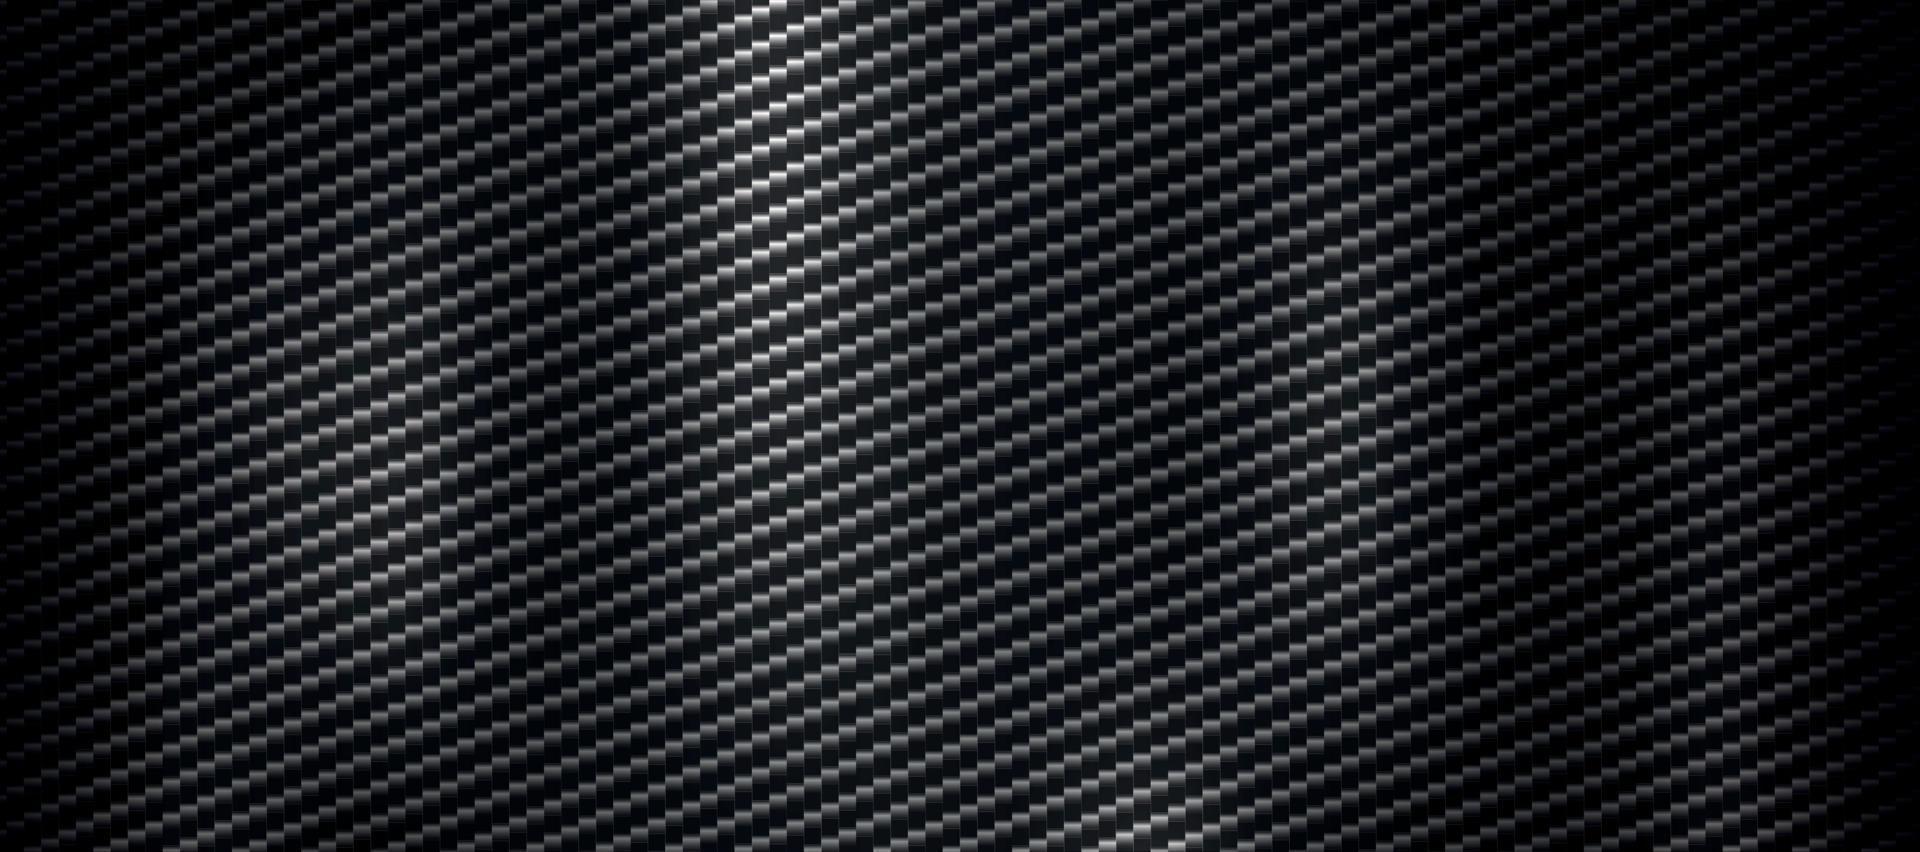 panorama- mörk kol fiber textur med slingor - vektor